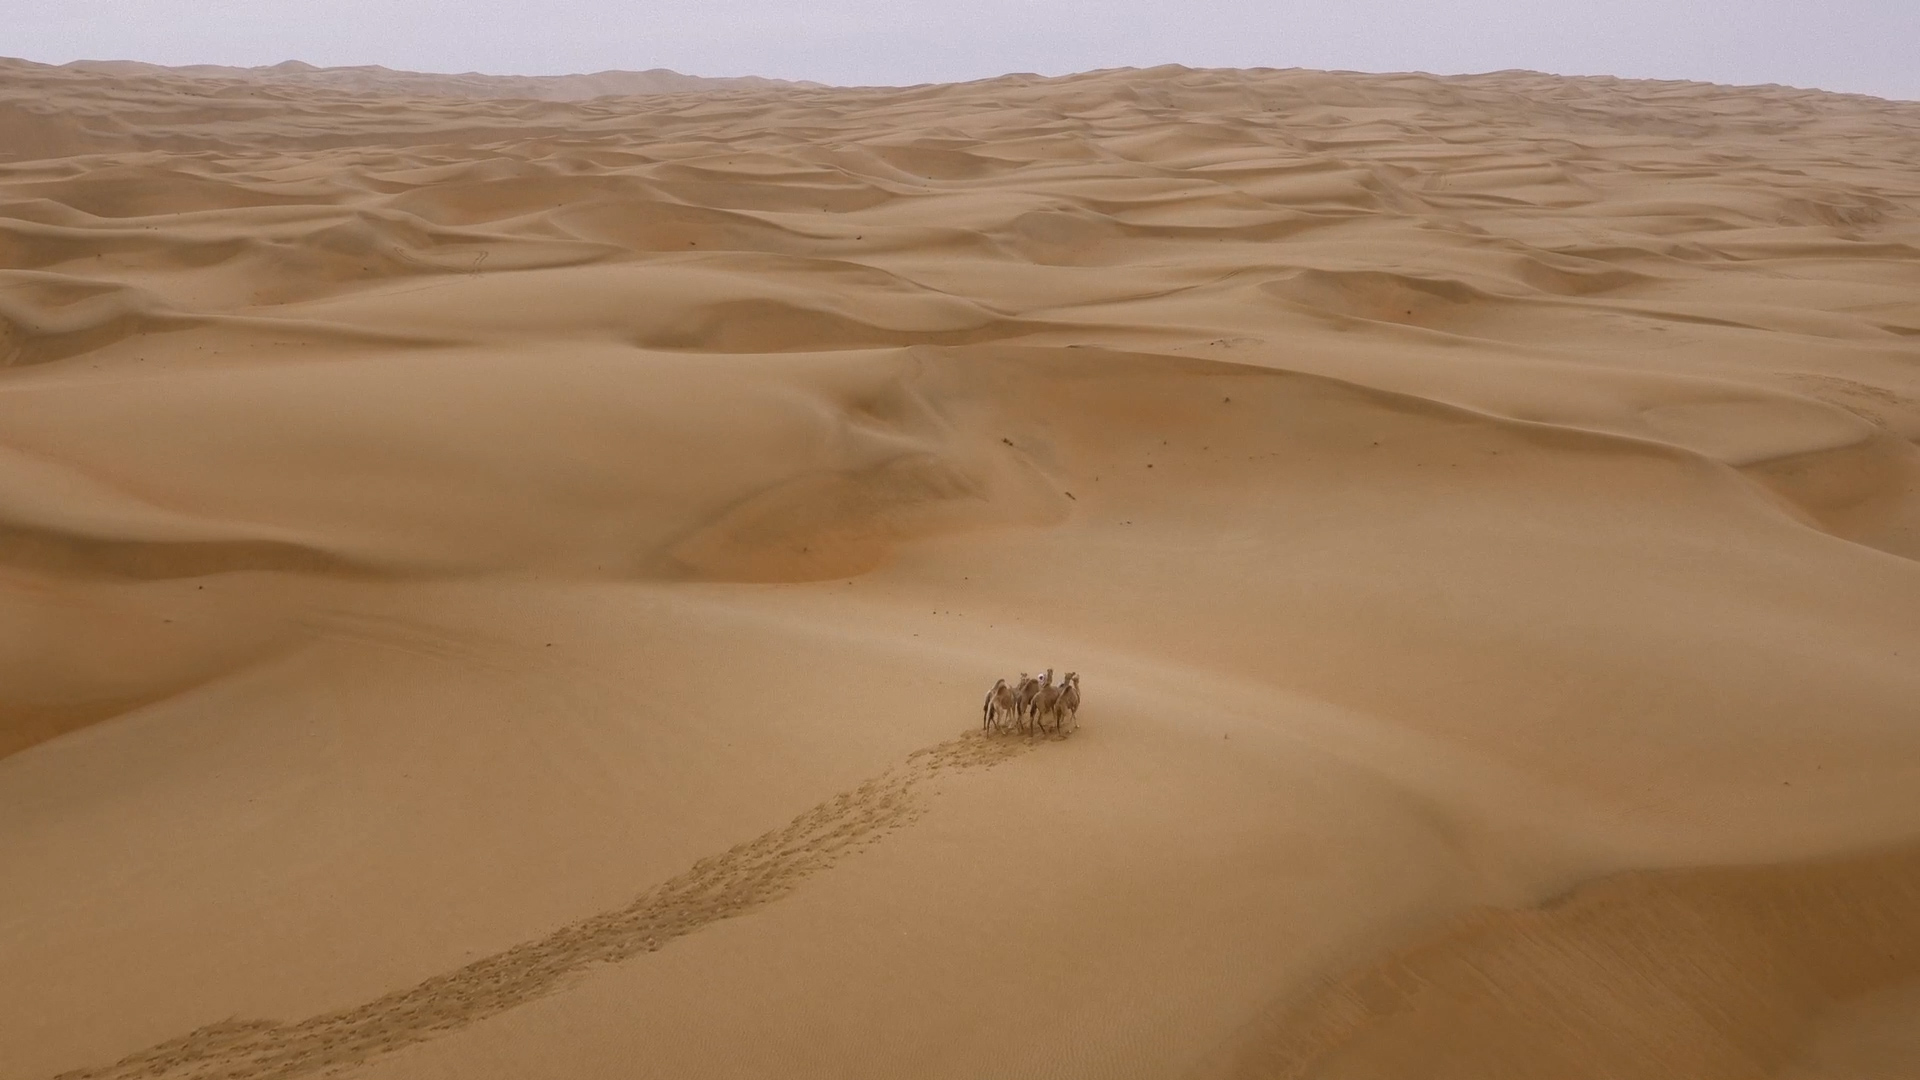 Secrets of the Dunes